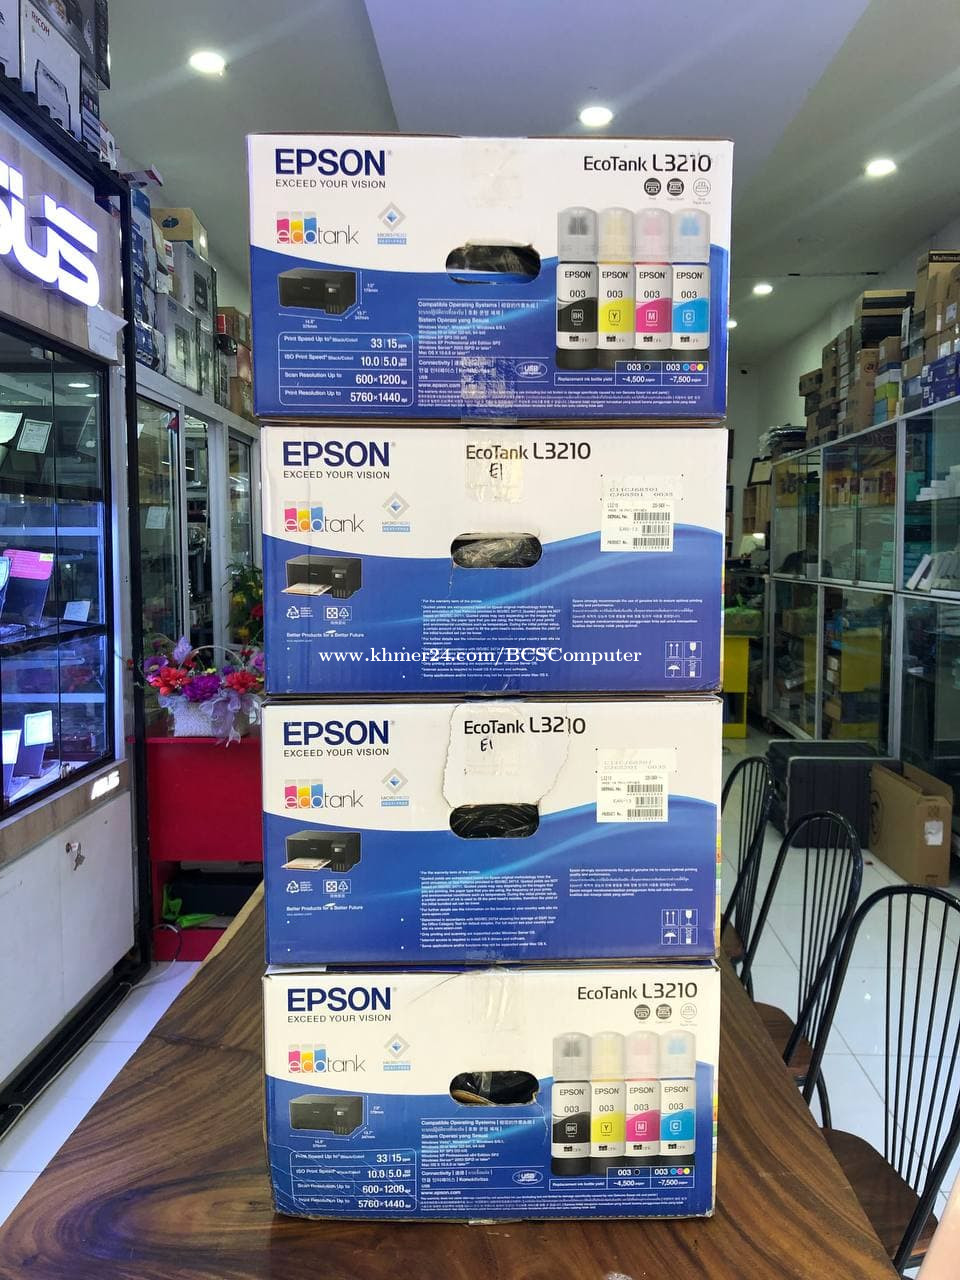 Printer Epson Ecotank L3210 Price 16900 In Phnom Penh Cambodia Bcscomputer 4988